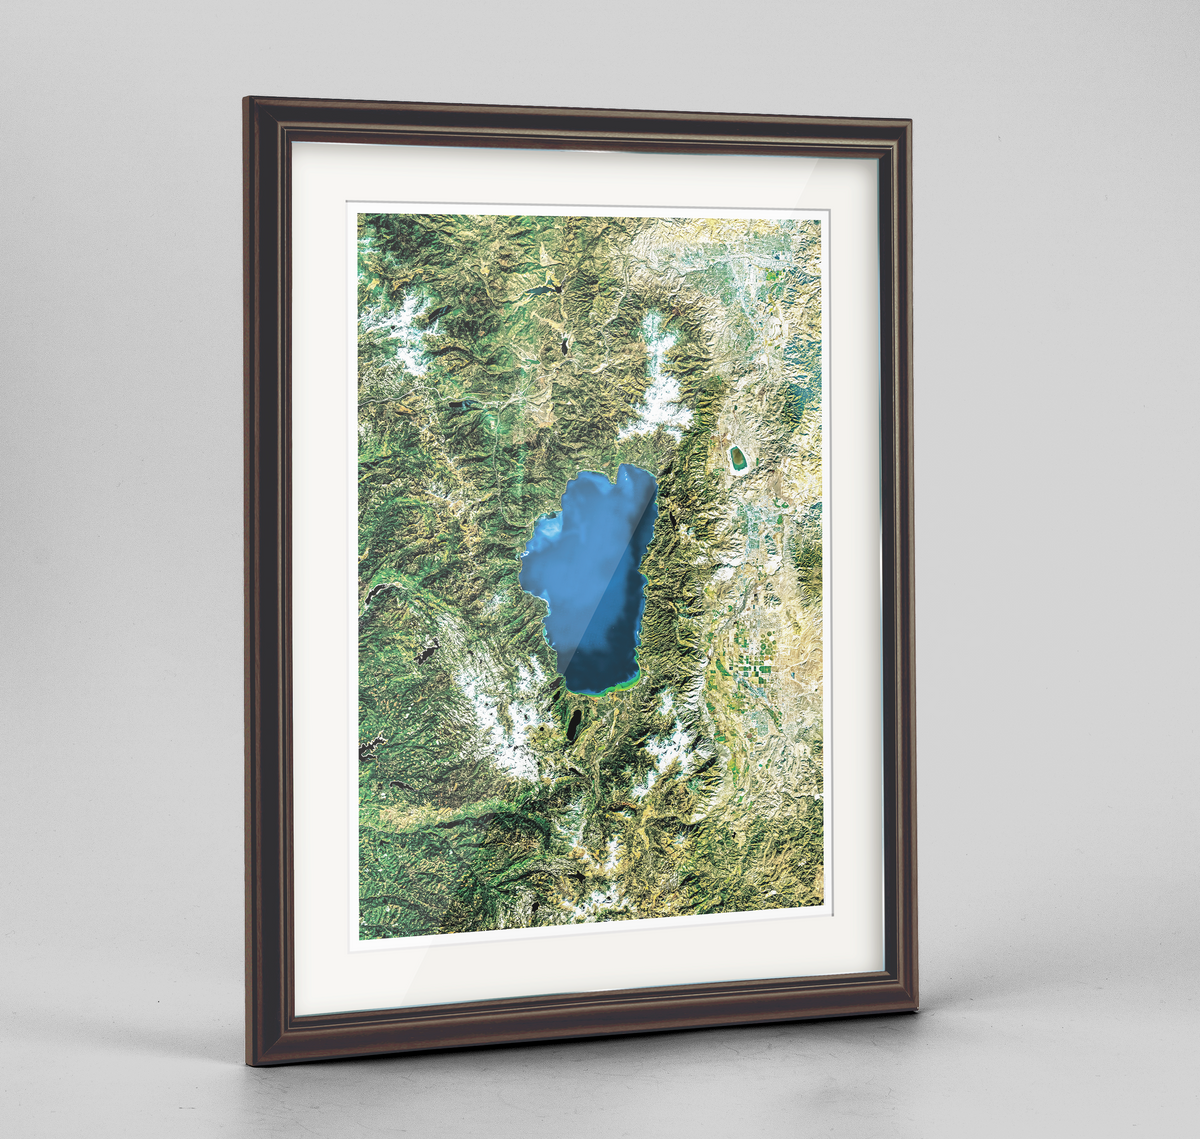 Lake Tahoe Earth Photography Art Print - Framed